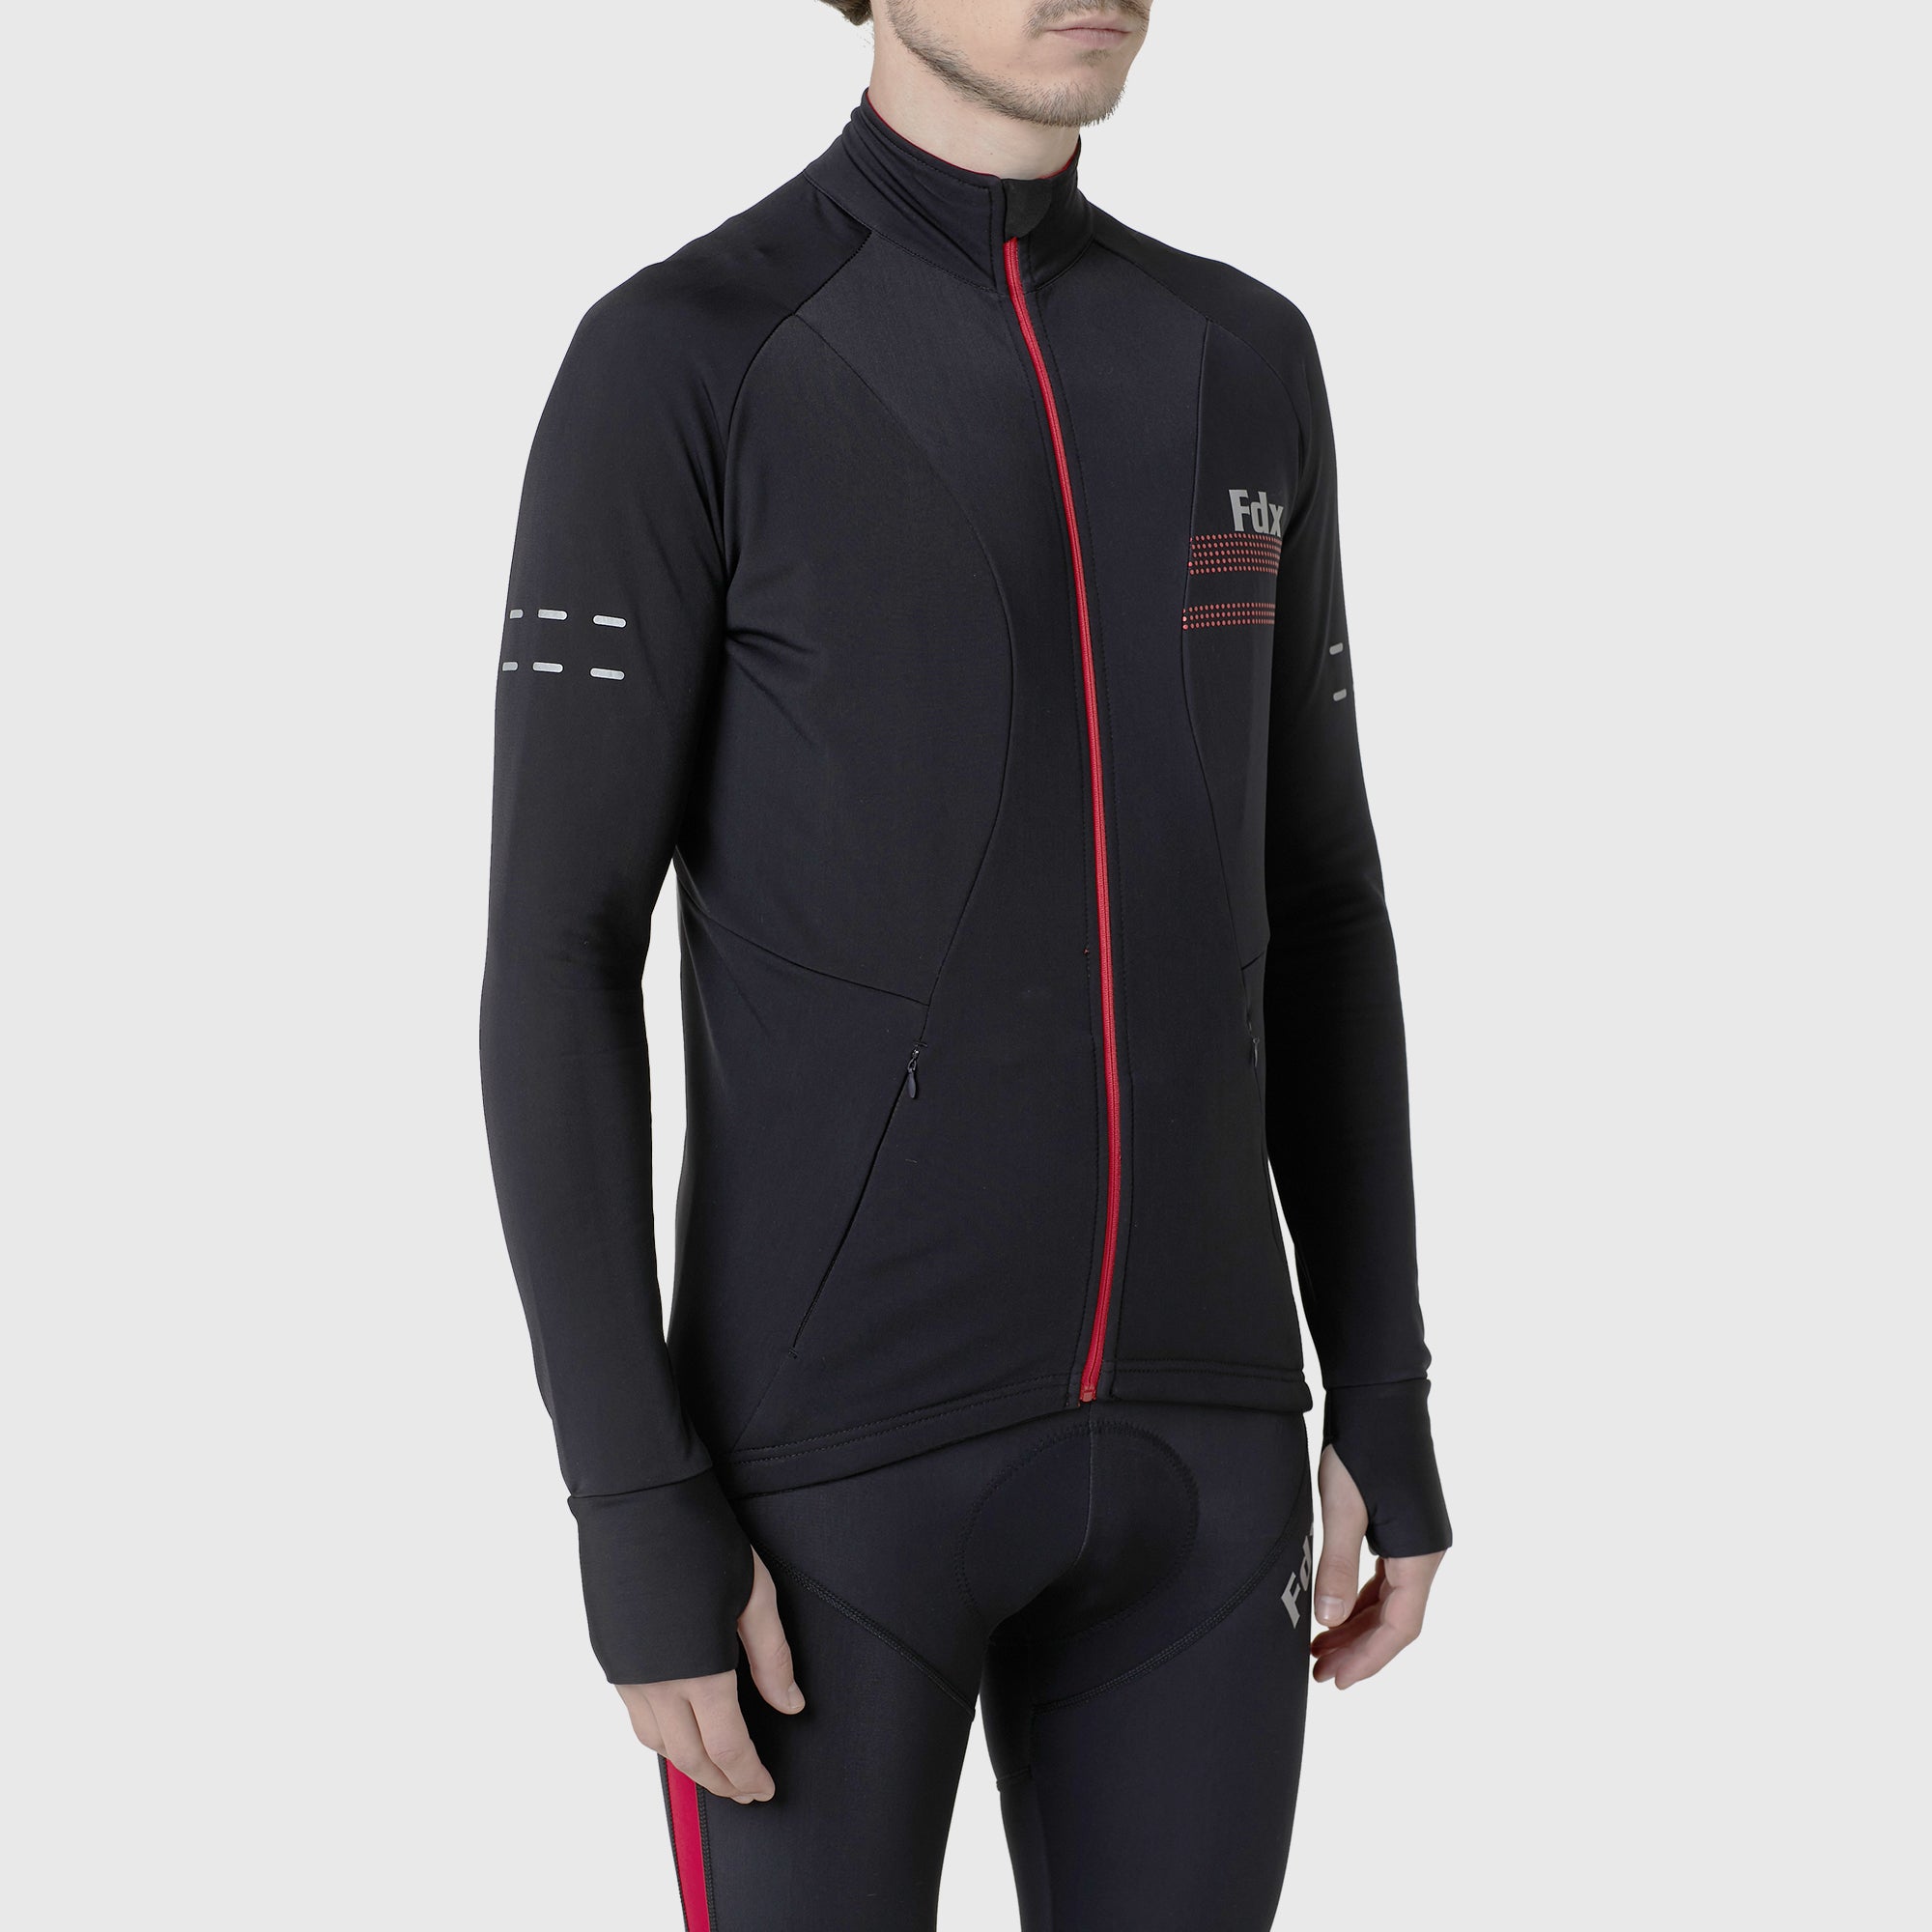 Fdx Red Warm Cycling Jersey for MensBlack for Winter Roubaix Thermal Fleece Road Bike Wear Top Full Zipper, Pockets & Hi-viz Reflectors - Arch